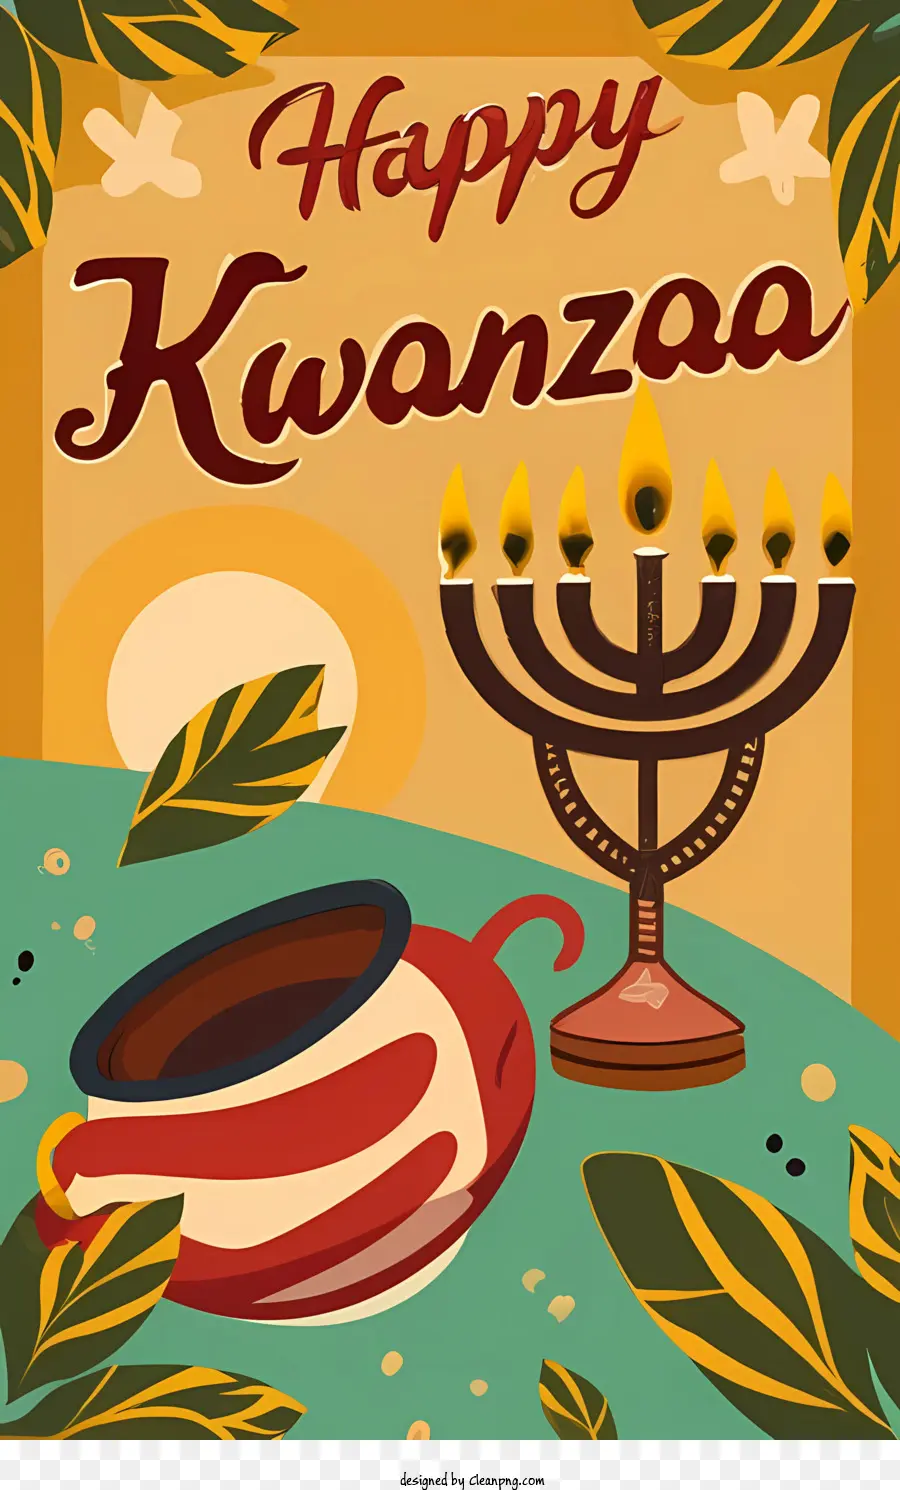 happy kwanzaa kwaanza kwaanza card jewish holiday diversity